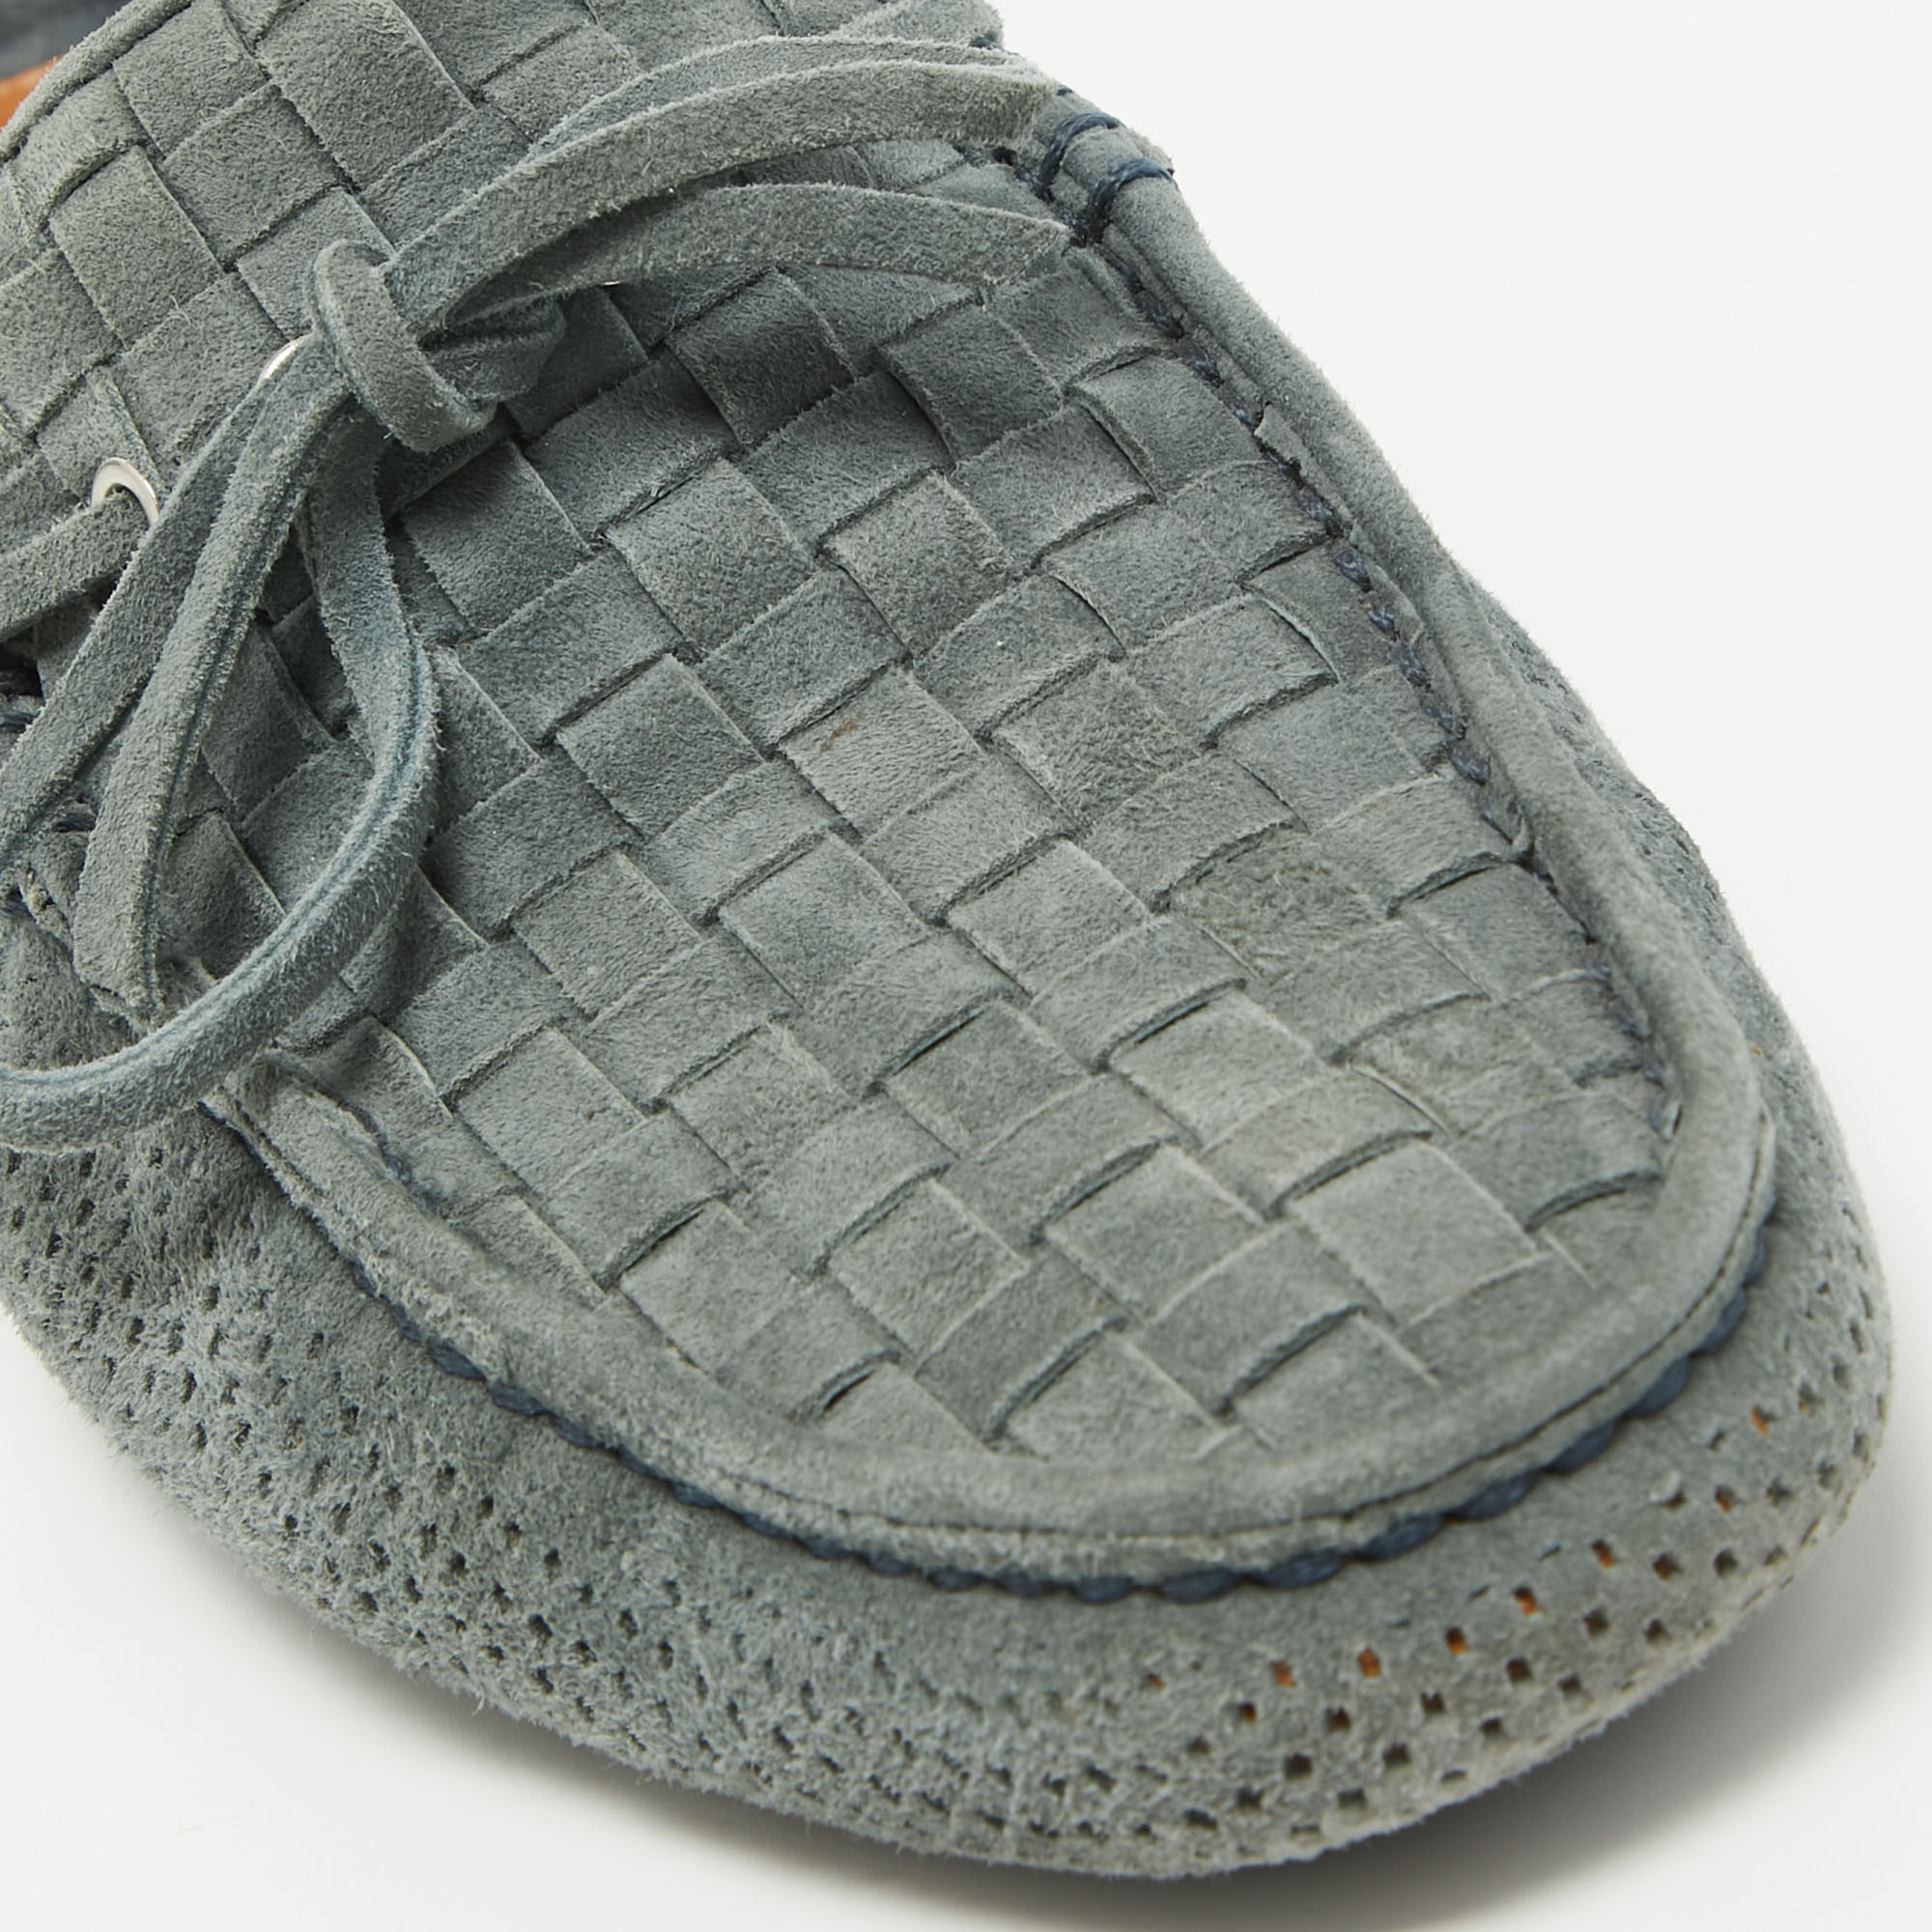 Santoni Grey Suede Slip On Loafers Size 42